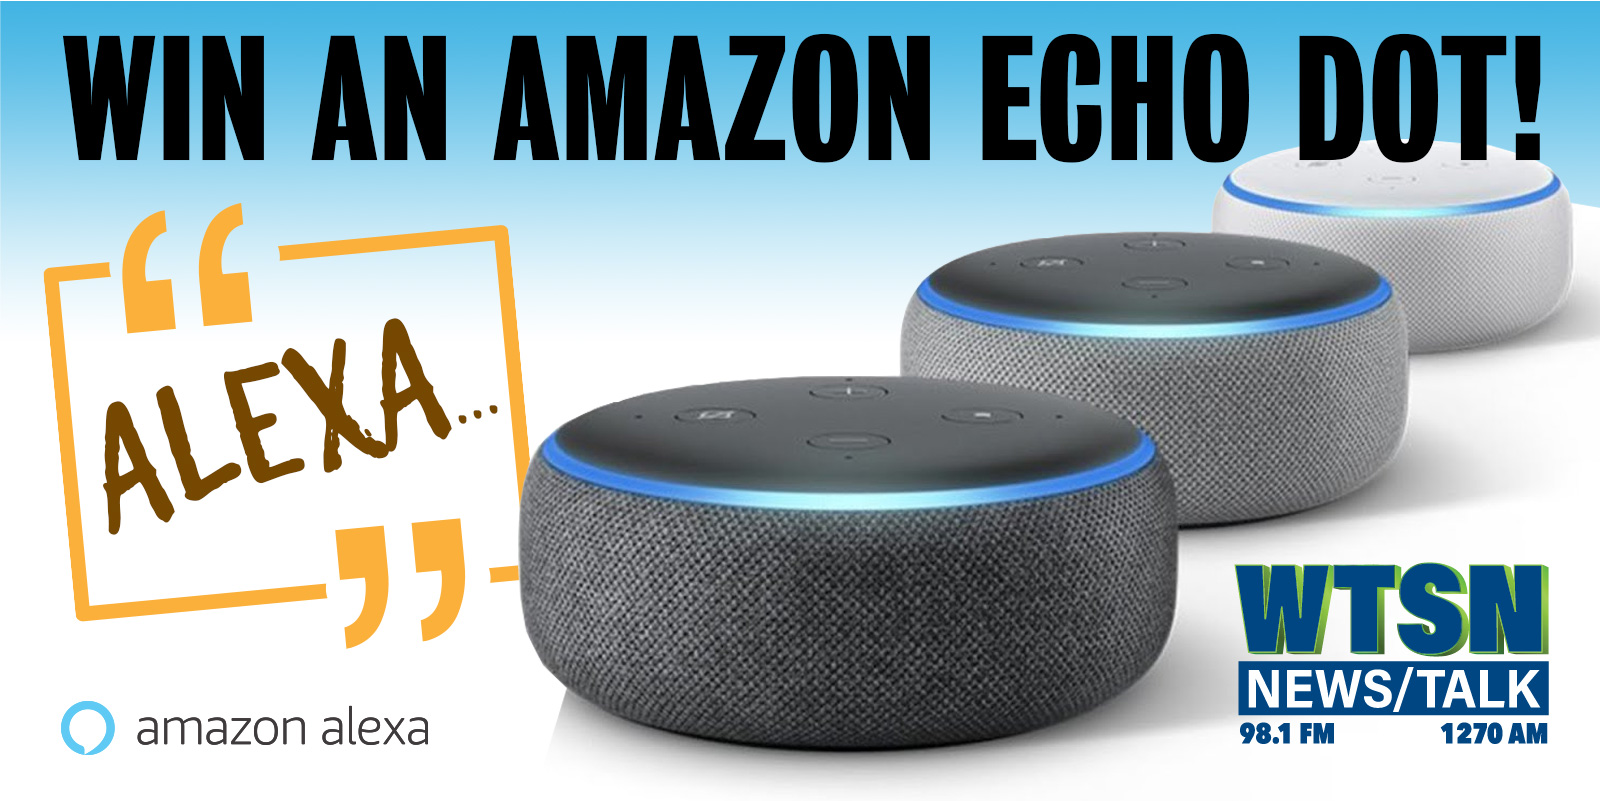 Here’s How to Win An Amazon Echo Dot